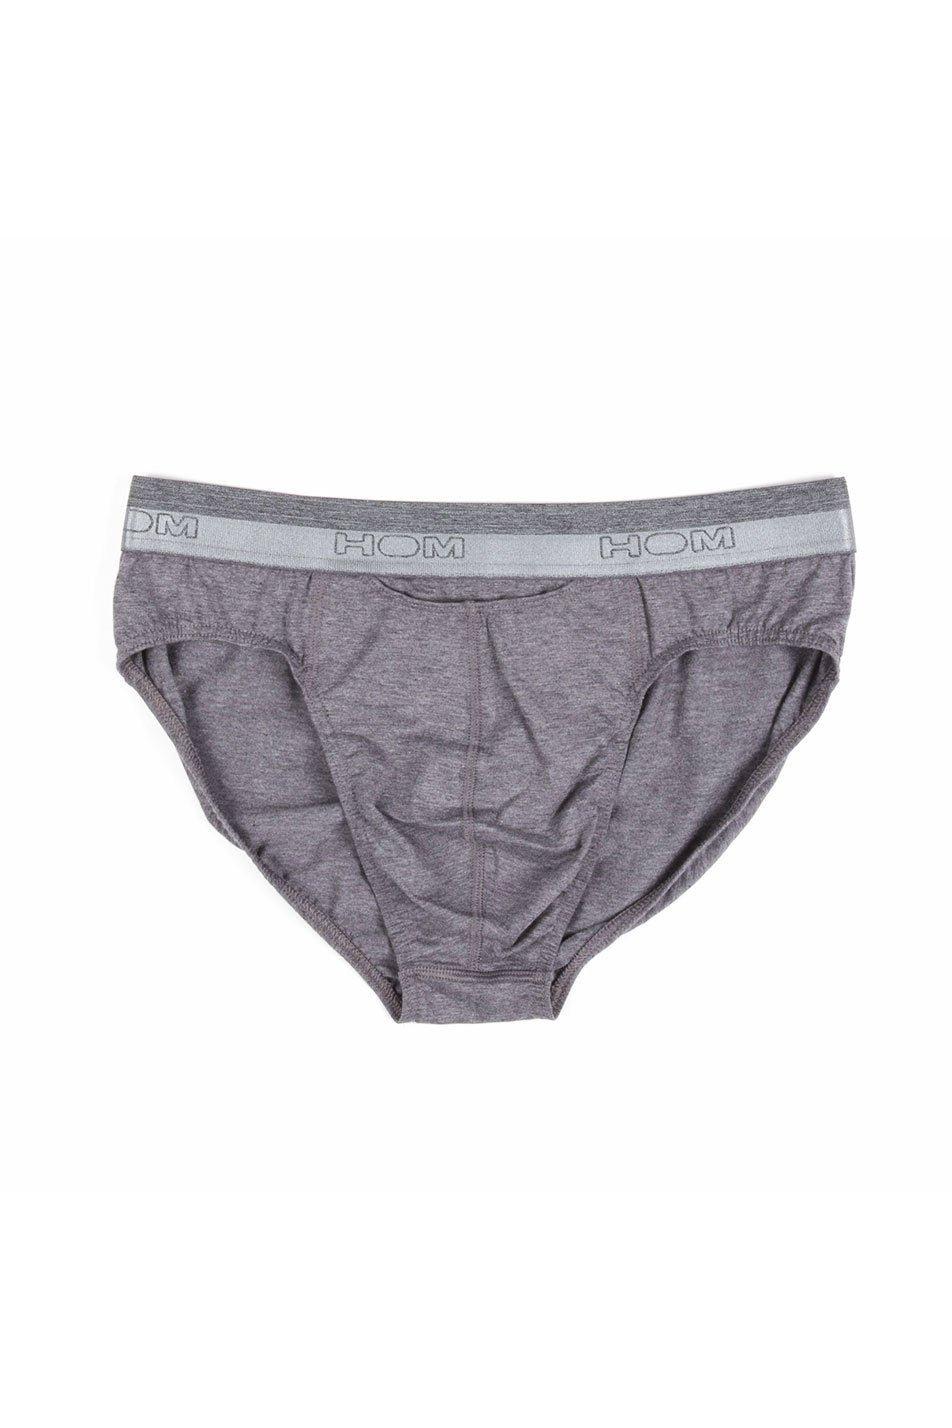 Style Brief – HOM Elysee HO1 Mini Brief – Underwear News Briefs